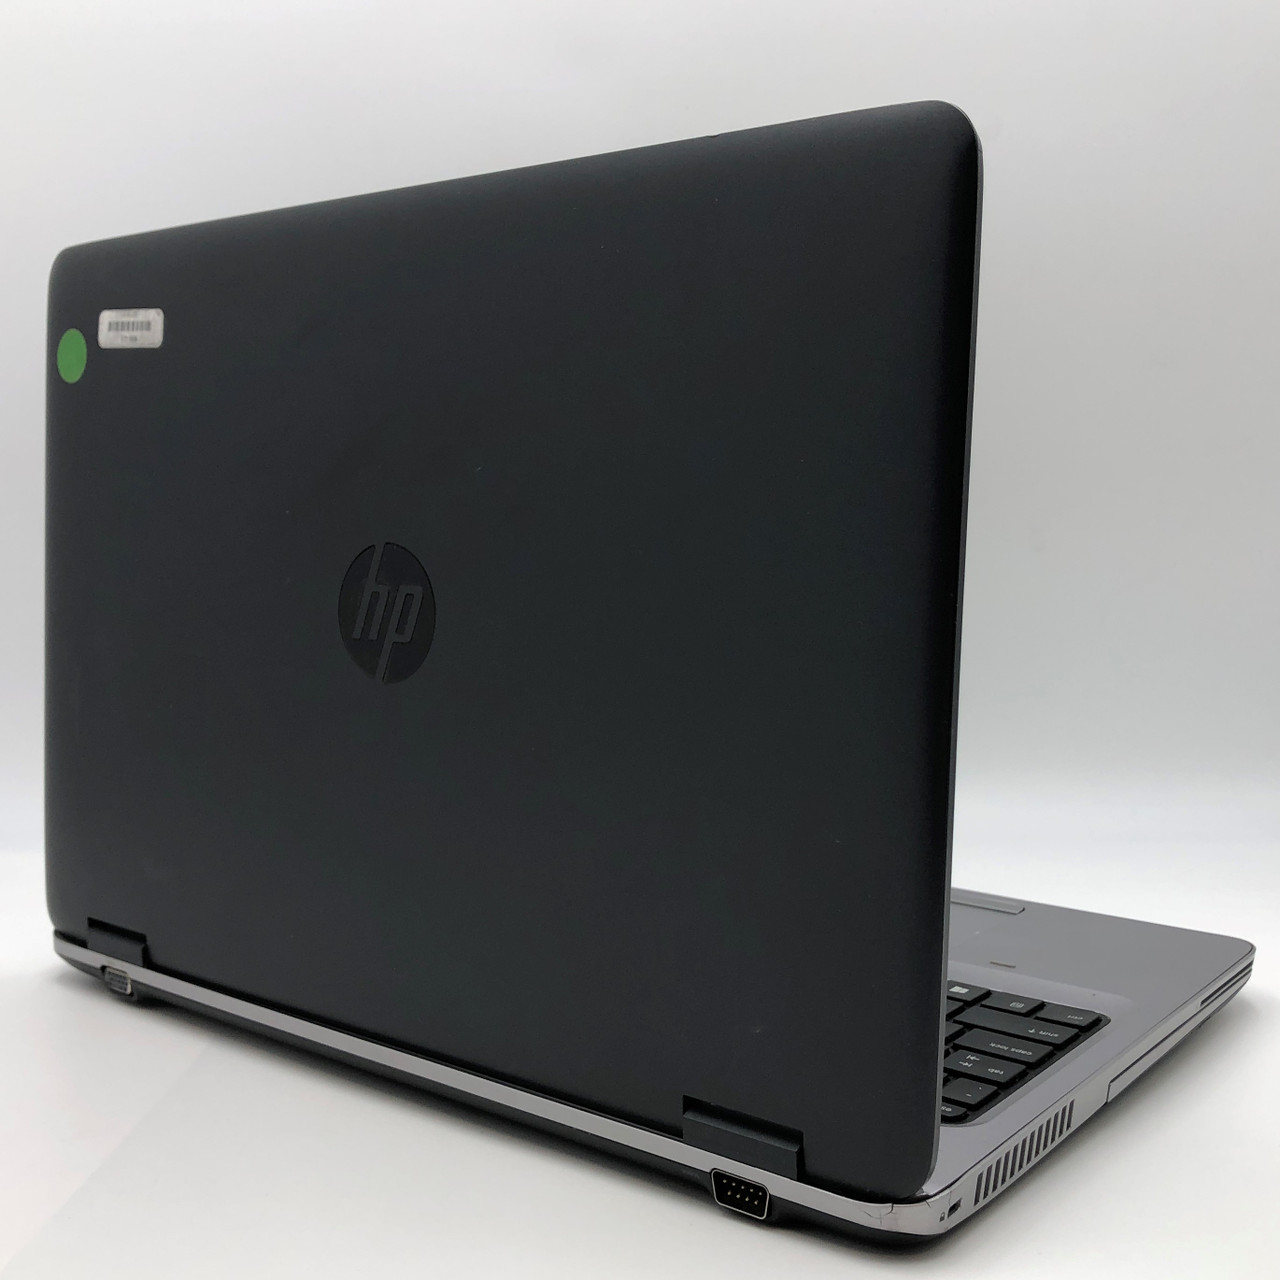 HP PROBOOK 650-G3 - INTEL CORE I5 7TH GEN @ 2.50 GHZ, 8GB RAM, 256GB SSD